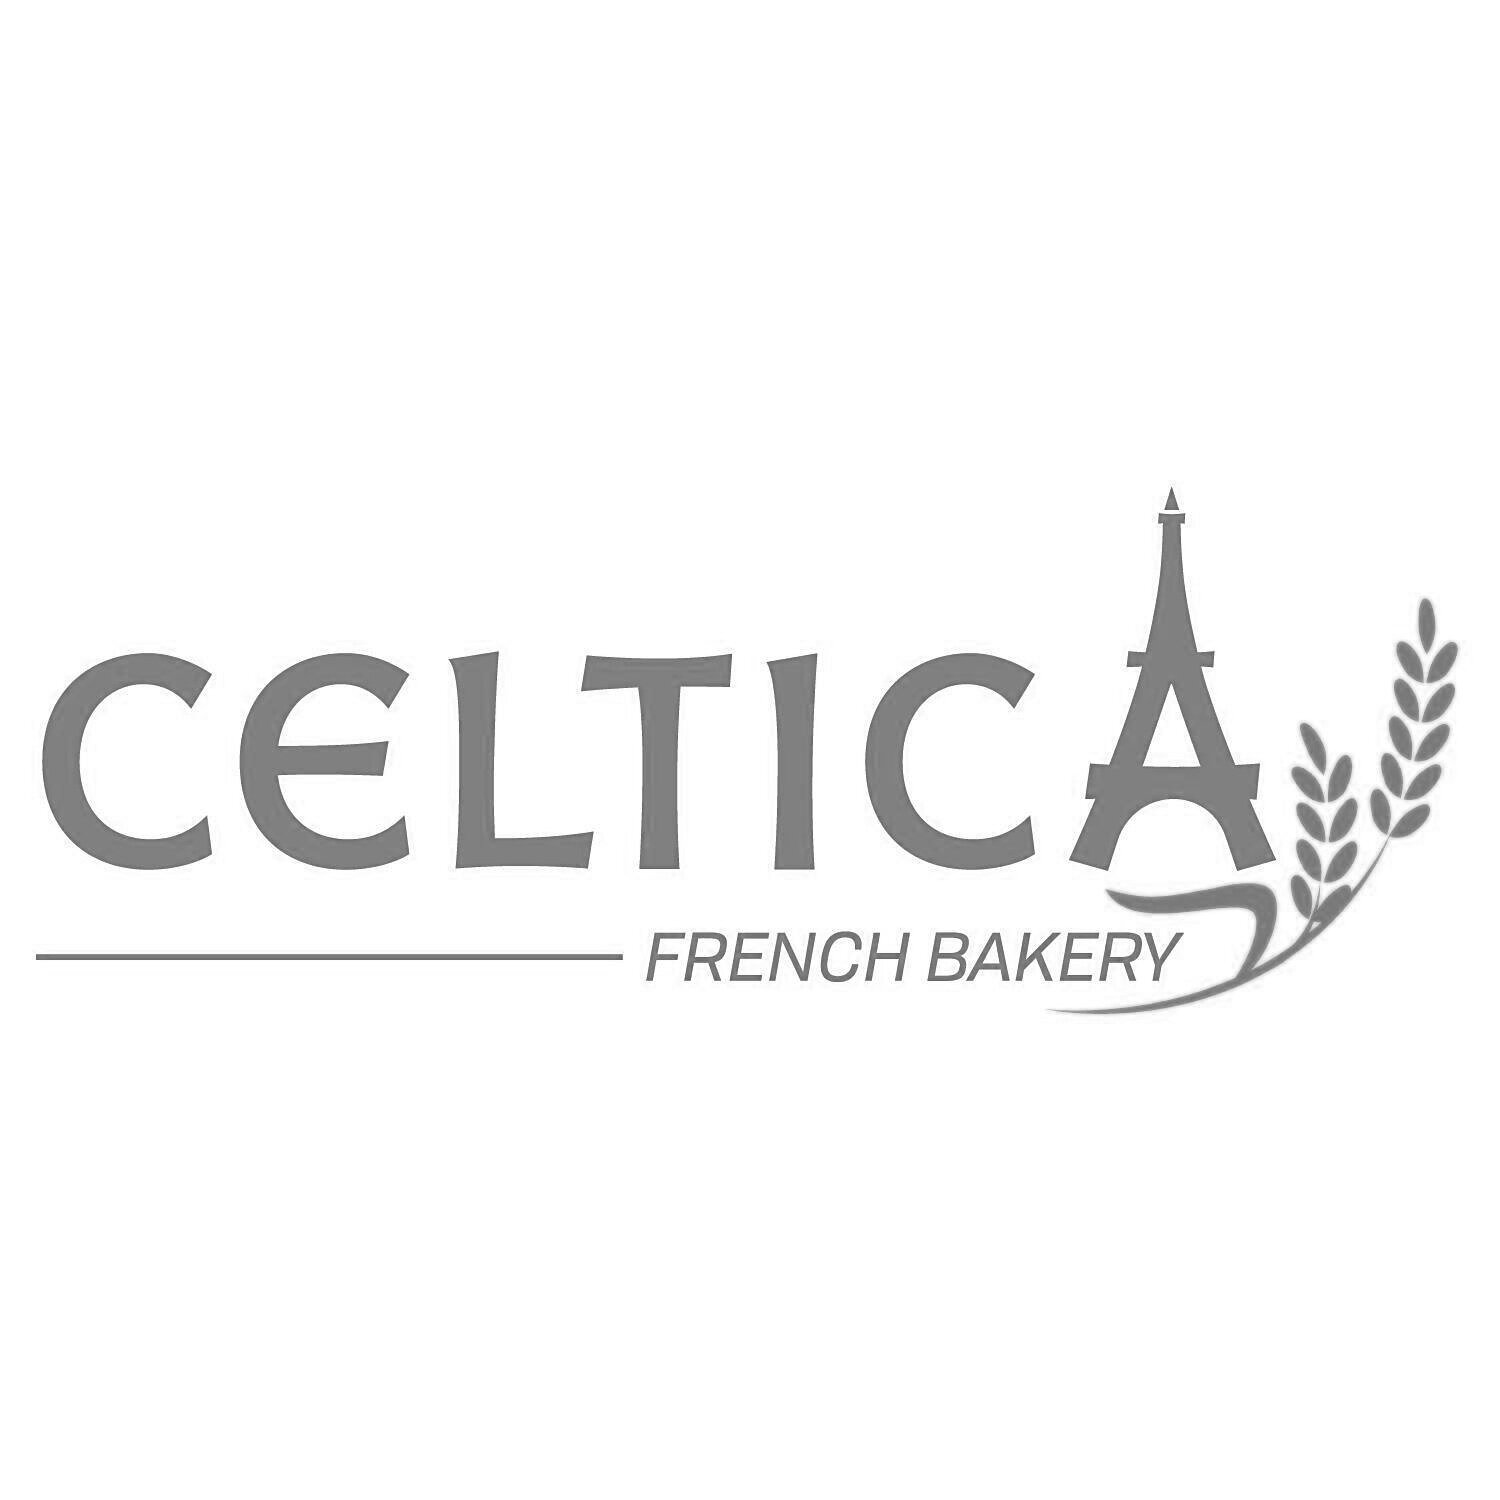 Celtica French Bakery